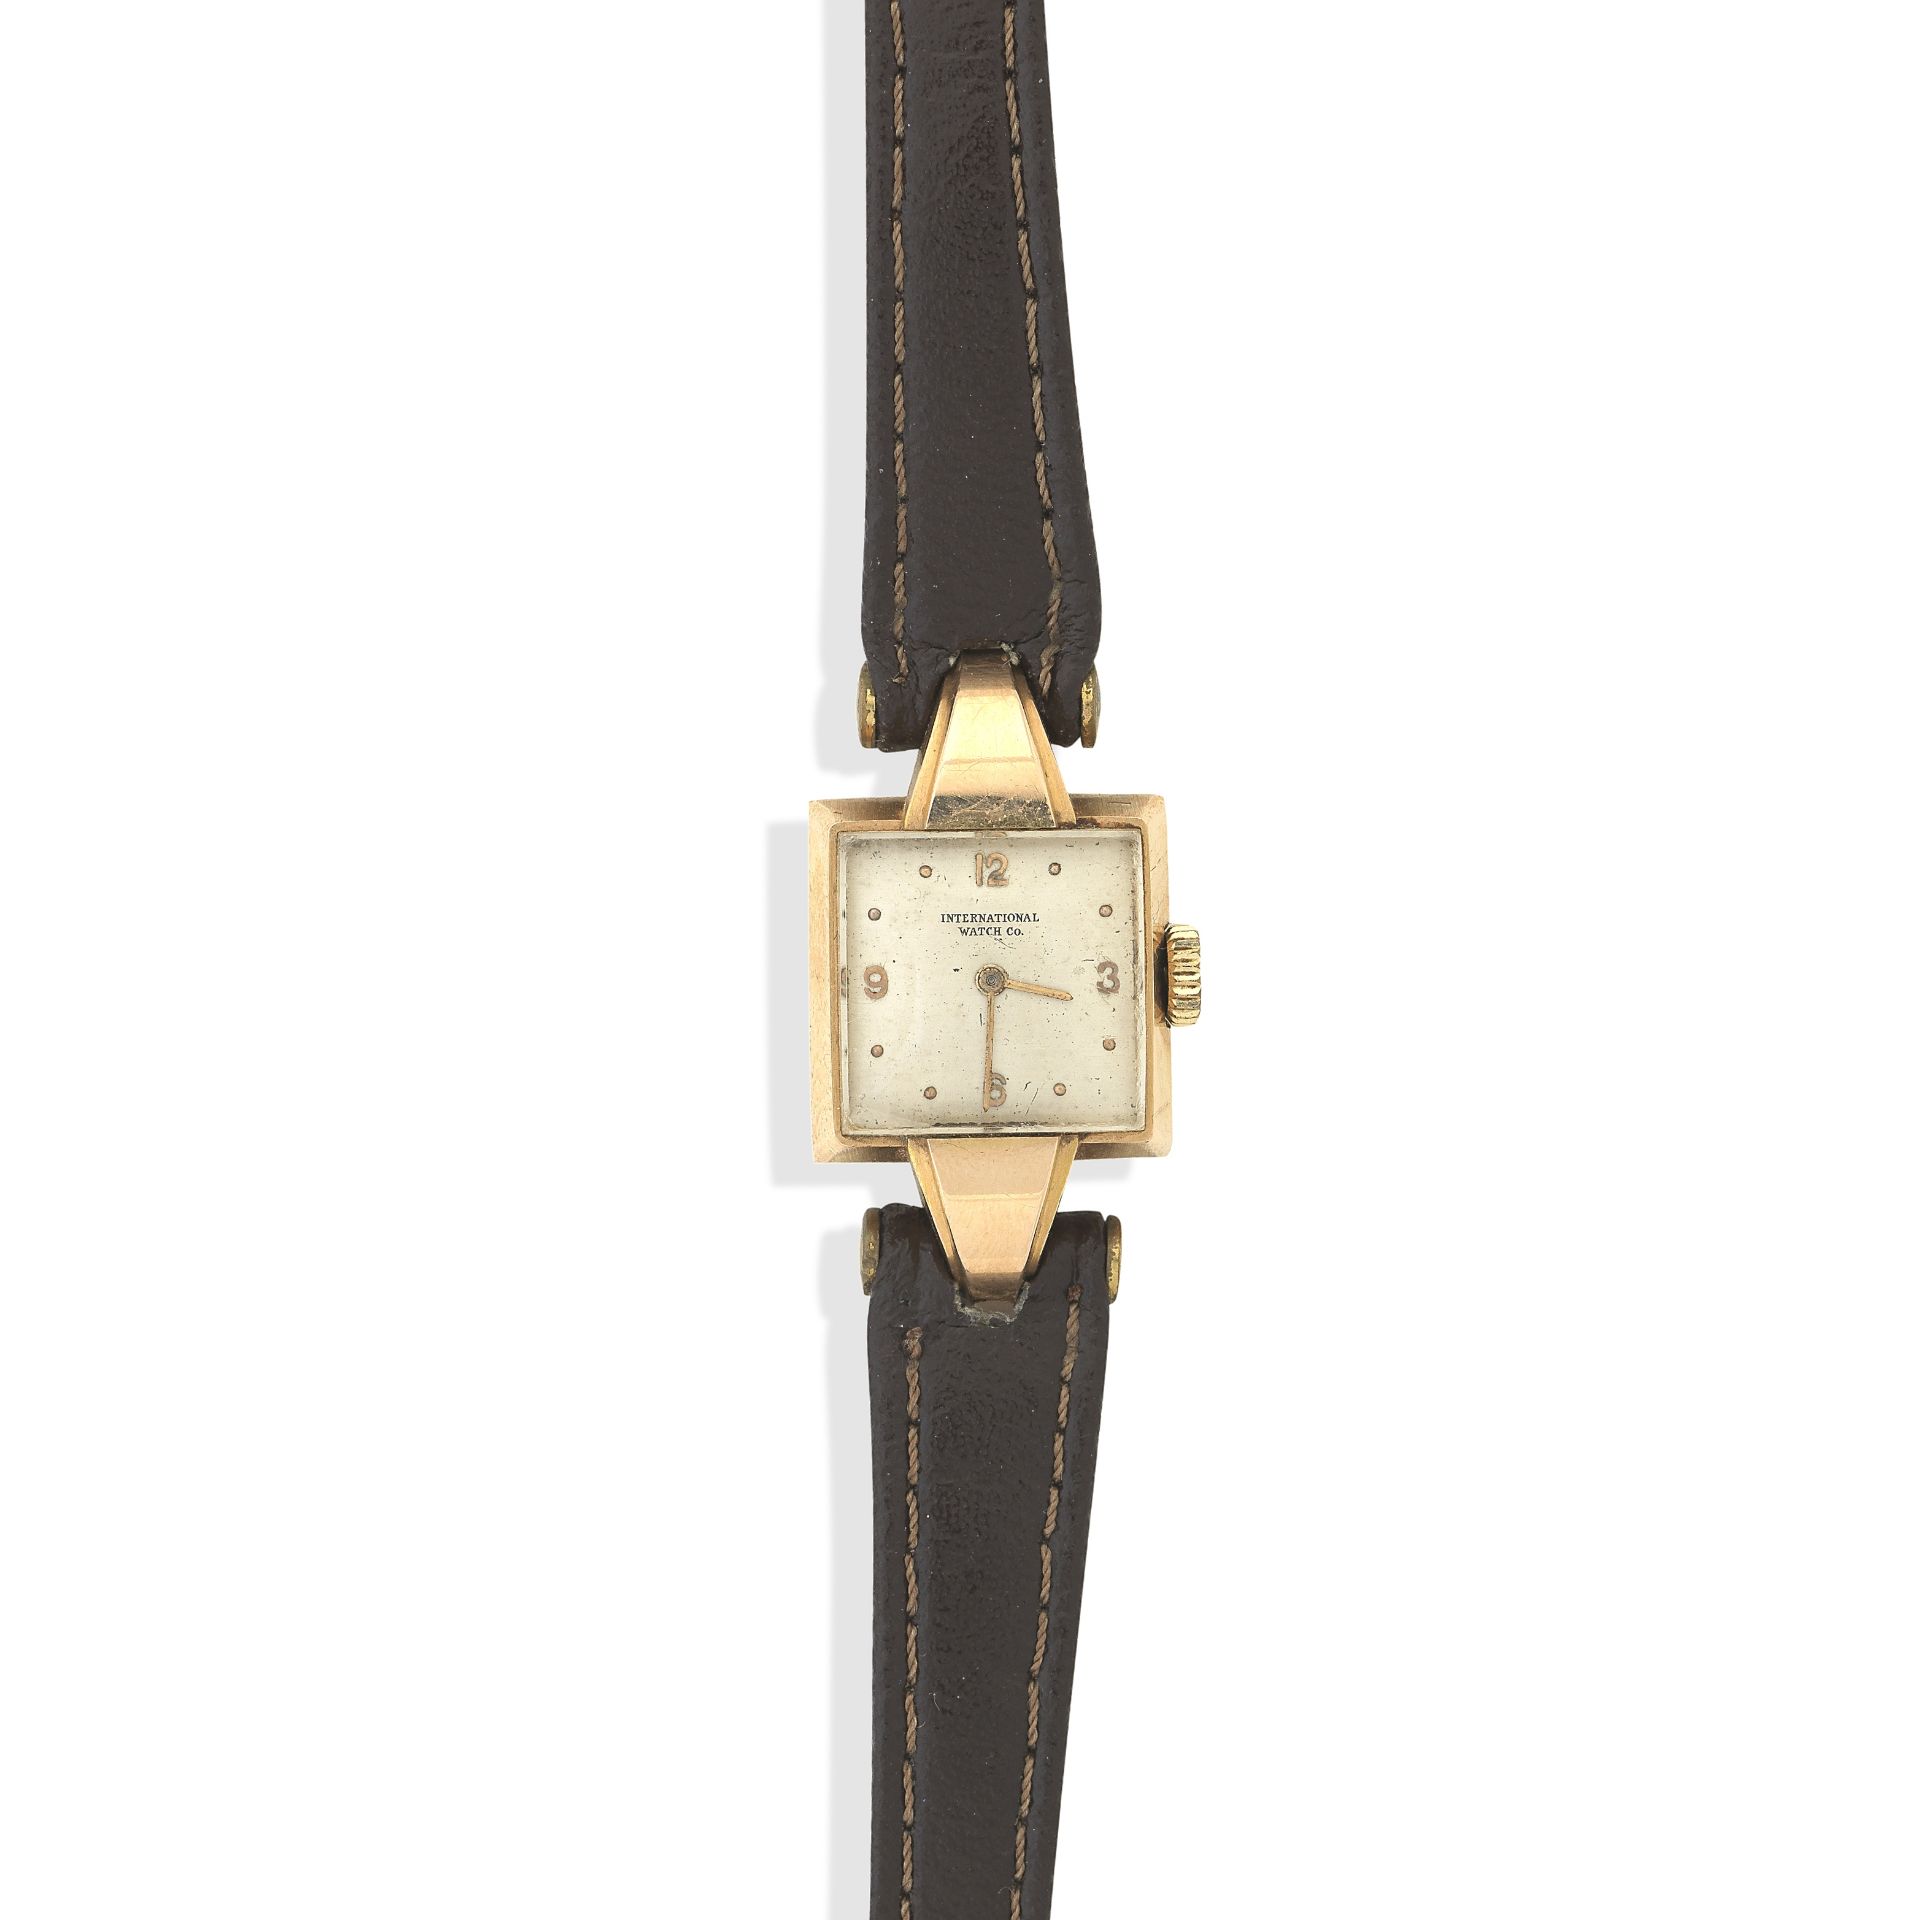 International Watch Company. An 18k gold ladies manual wind wristwatch